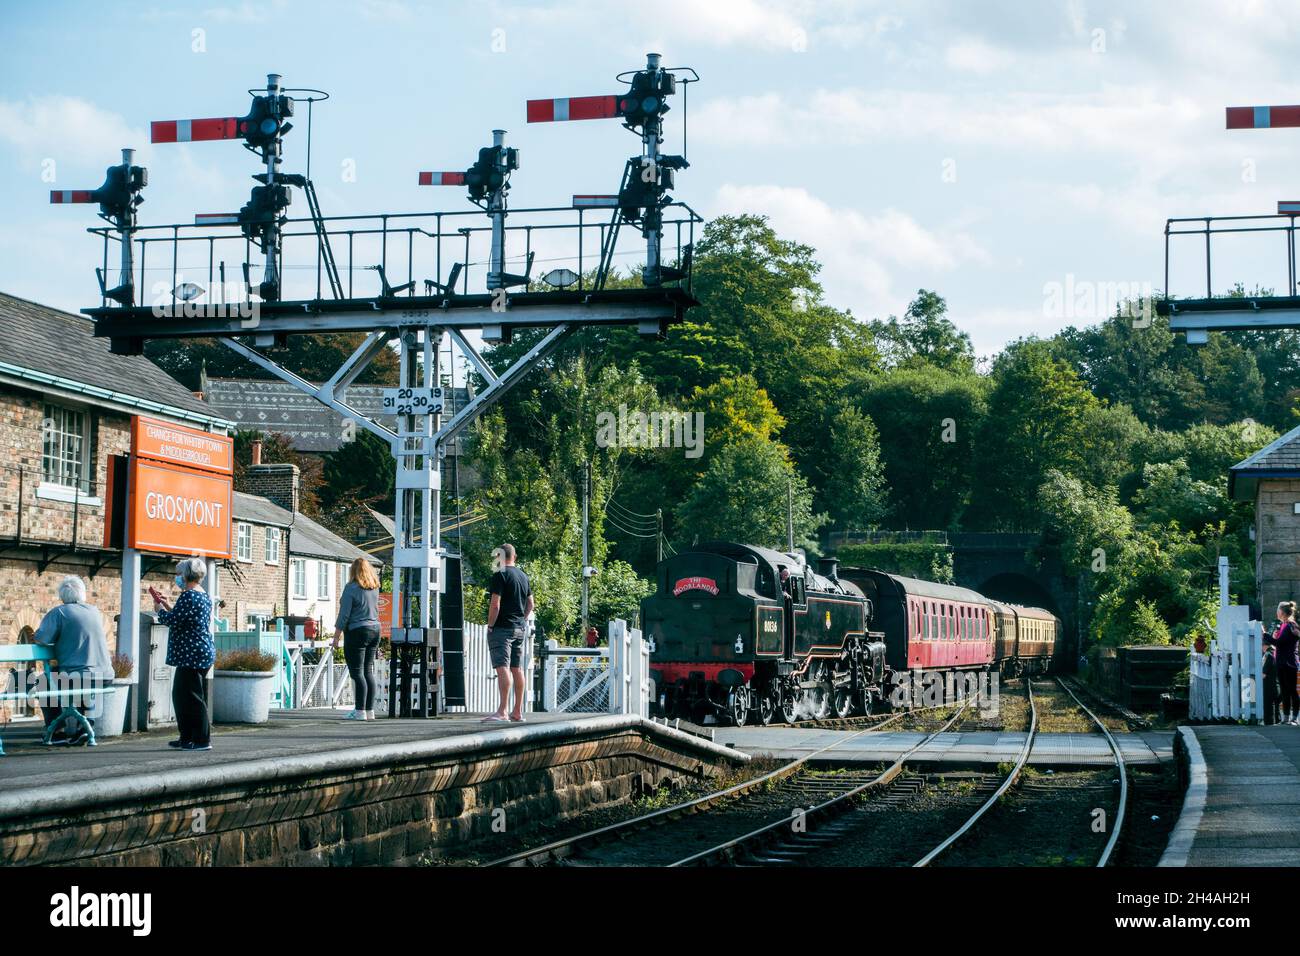 Steam train, The Moorlander, reversing into Grosmont station on the North York Moors Heritage Railway, UK Stock Photo